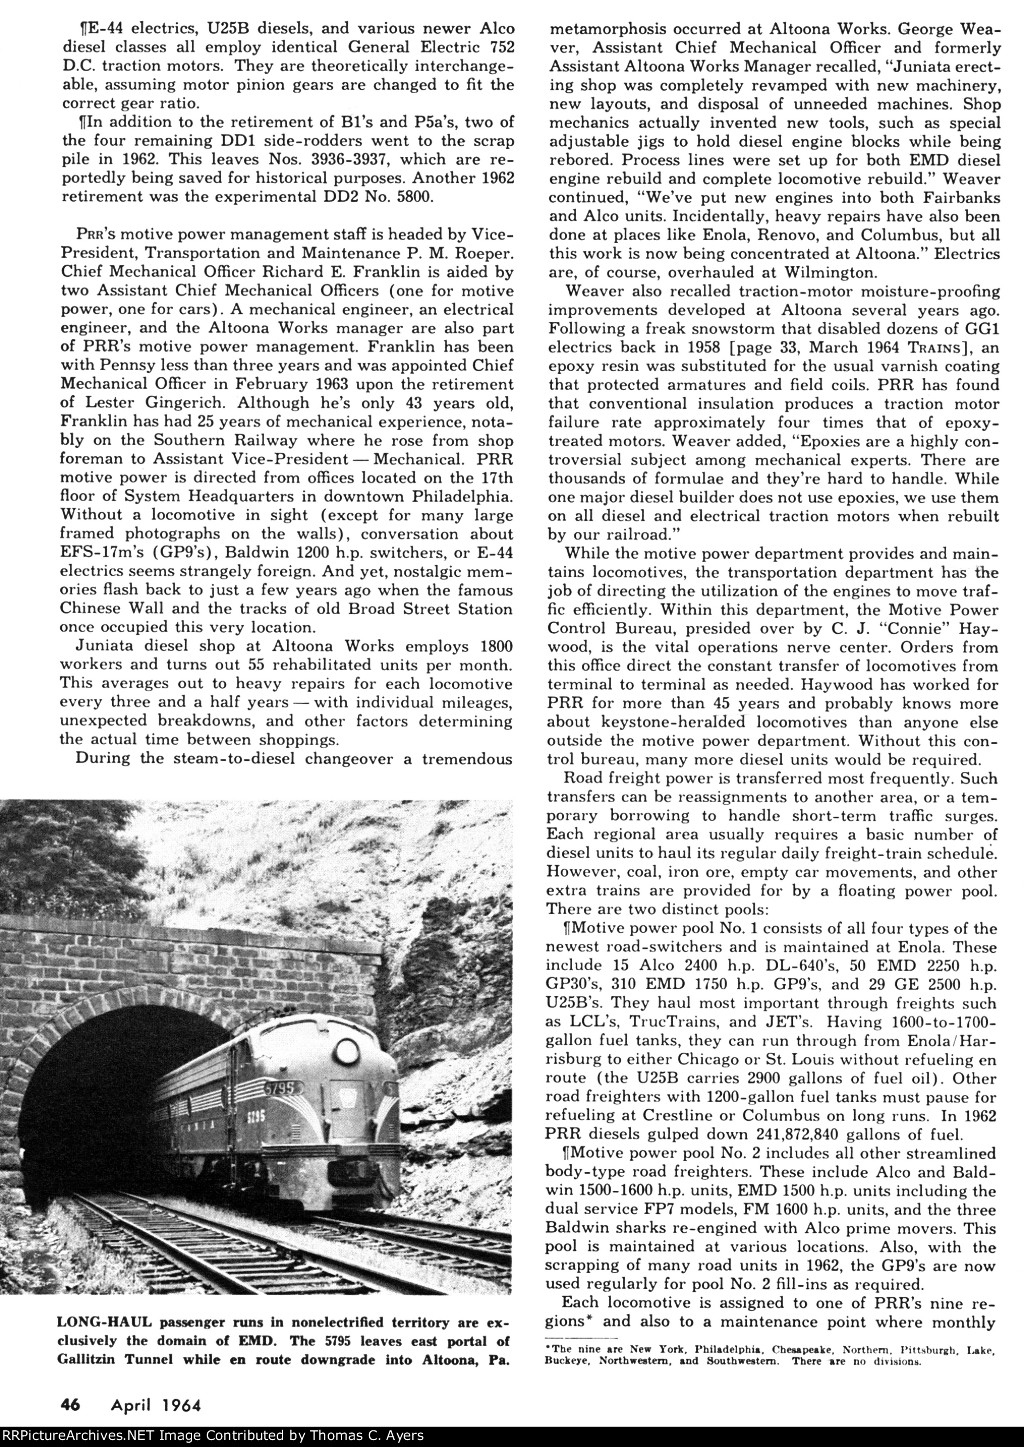 "Largest Locomotive Fleet," Page 46, 1964